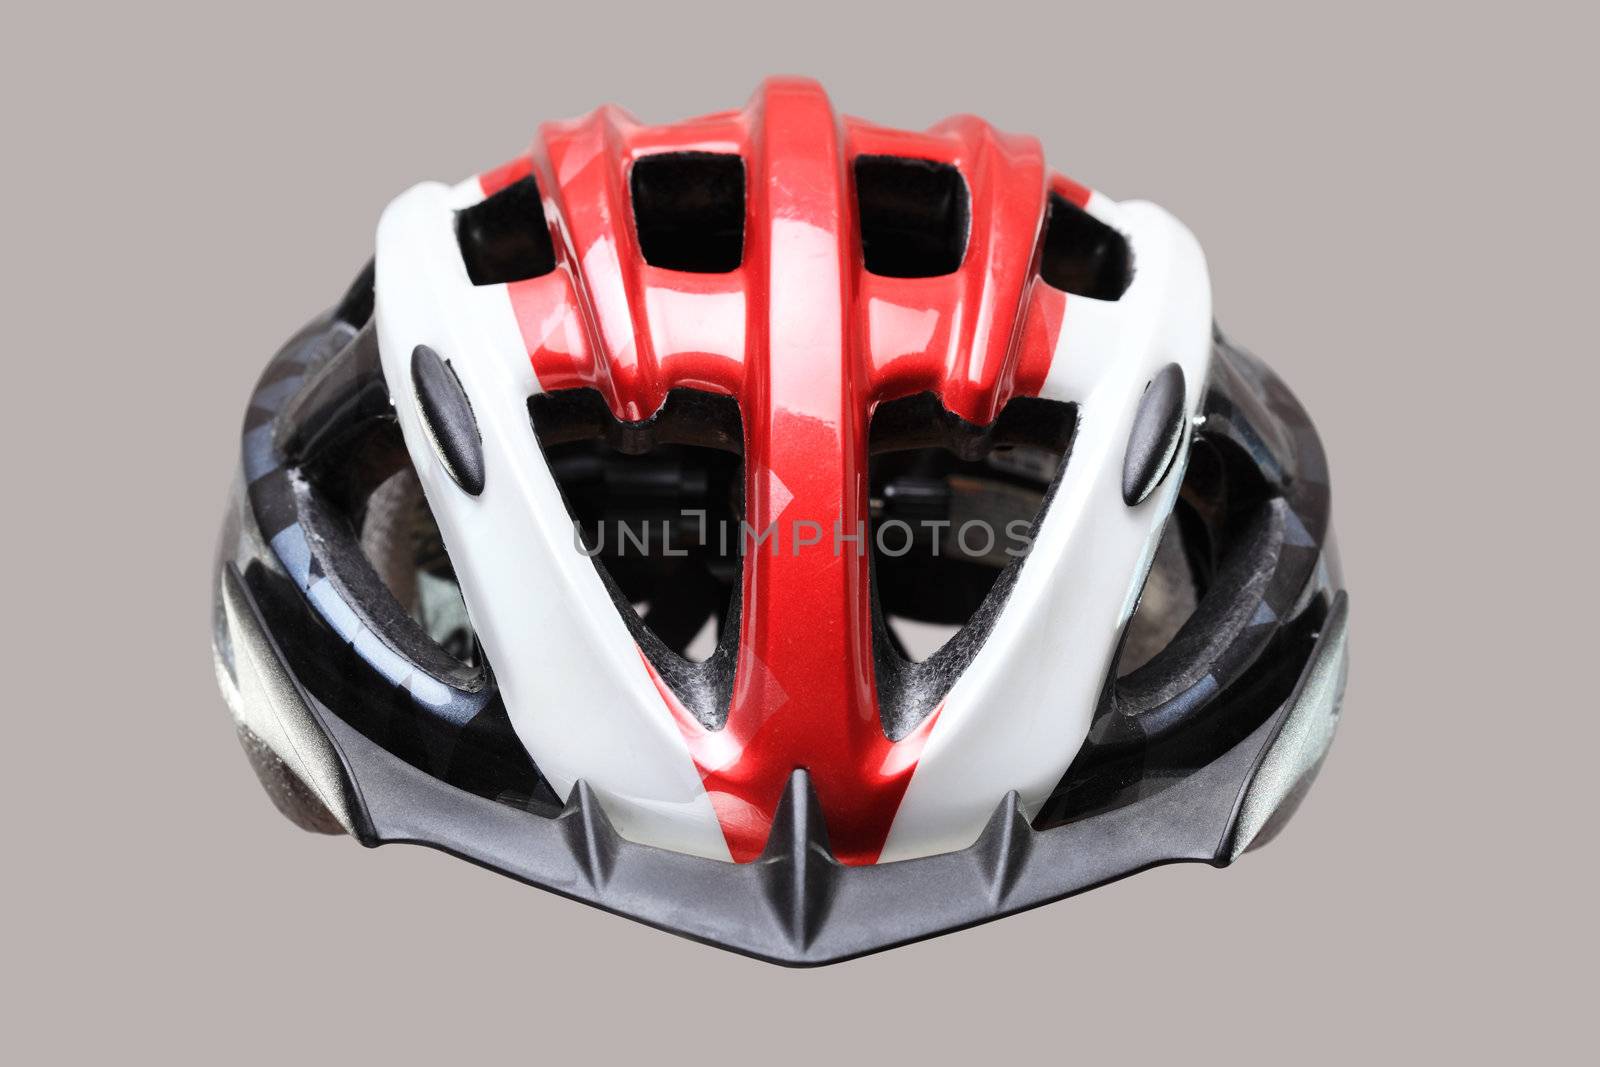 mountainbike helmet by kokimk